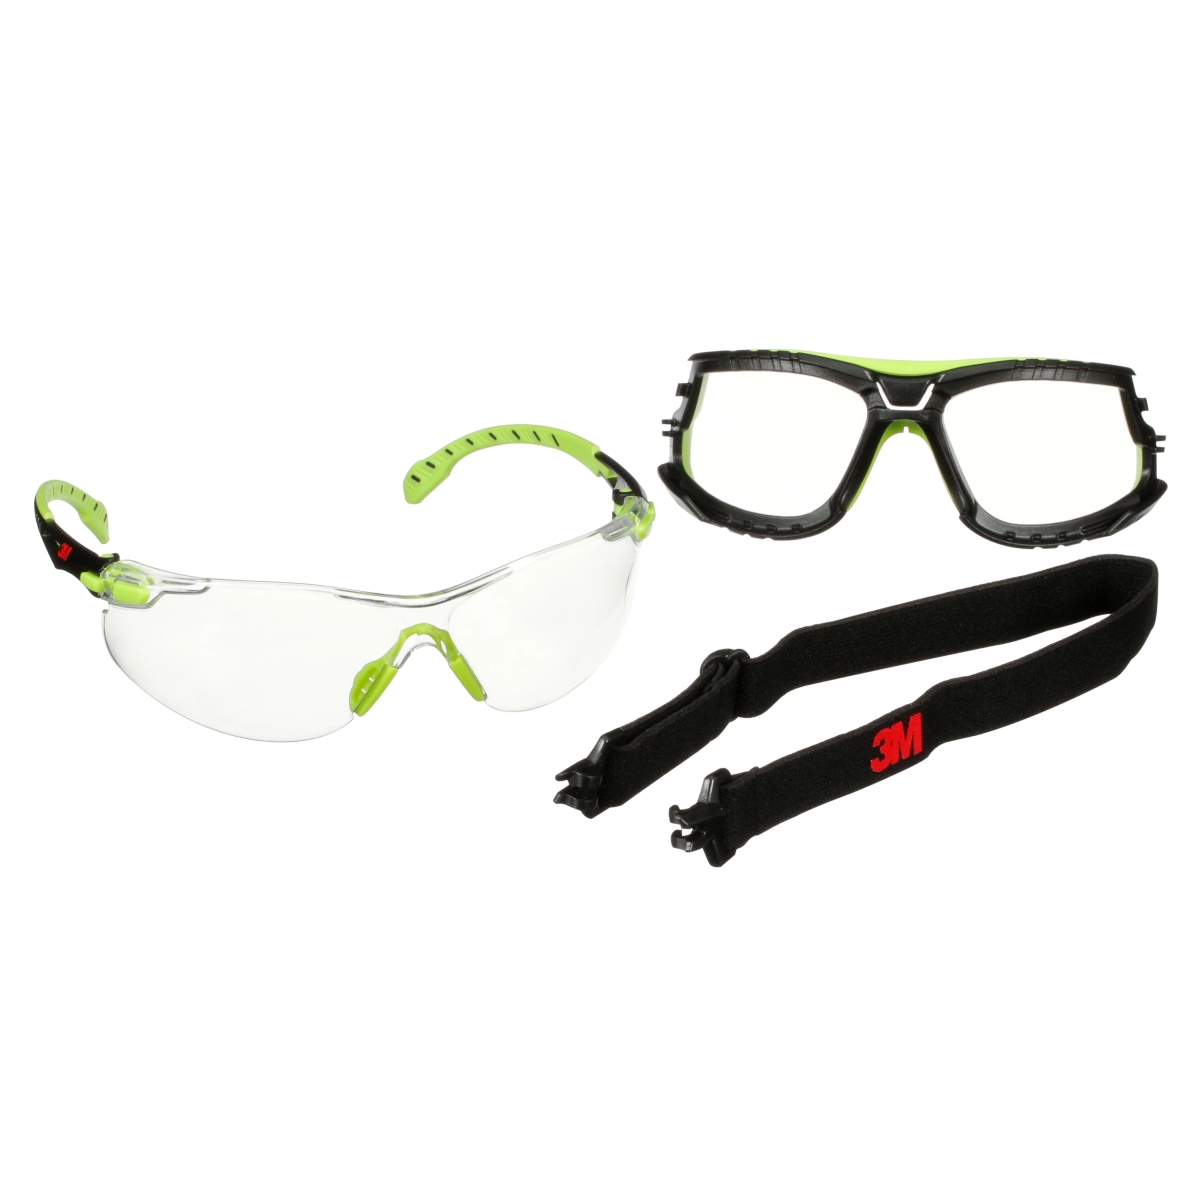 3M Solus 1000 safety spectacles, green/black temples, Scotchgard anti-fog/anti-scratch coating (K&amp;N), clear lens, TPE gasket and headband, S1201SGAF-TSKT-EU